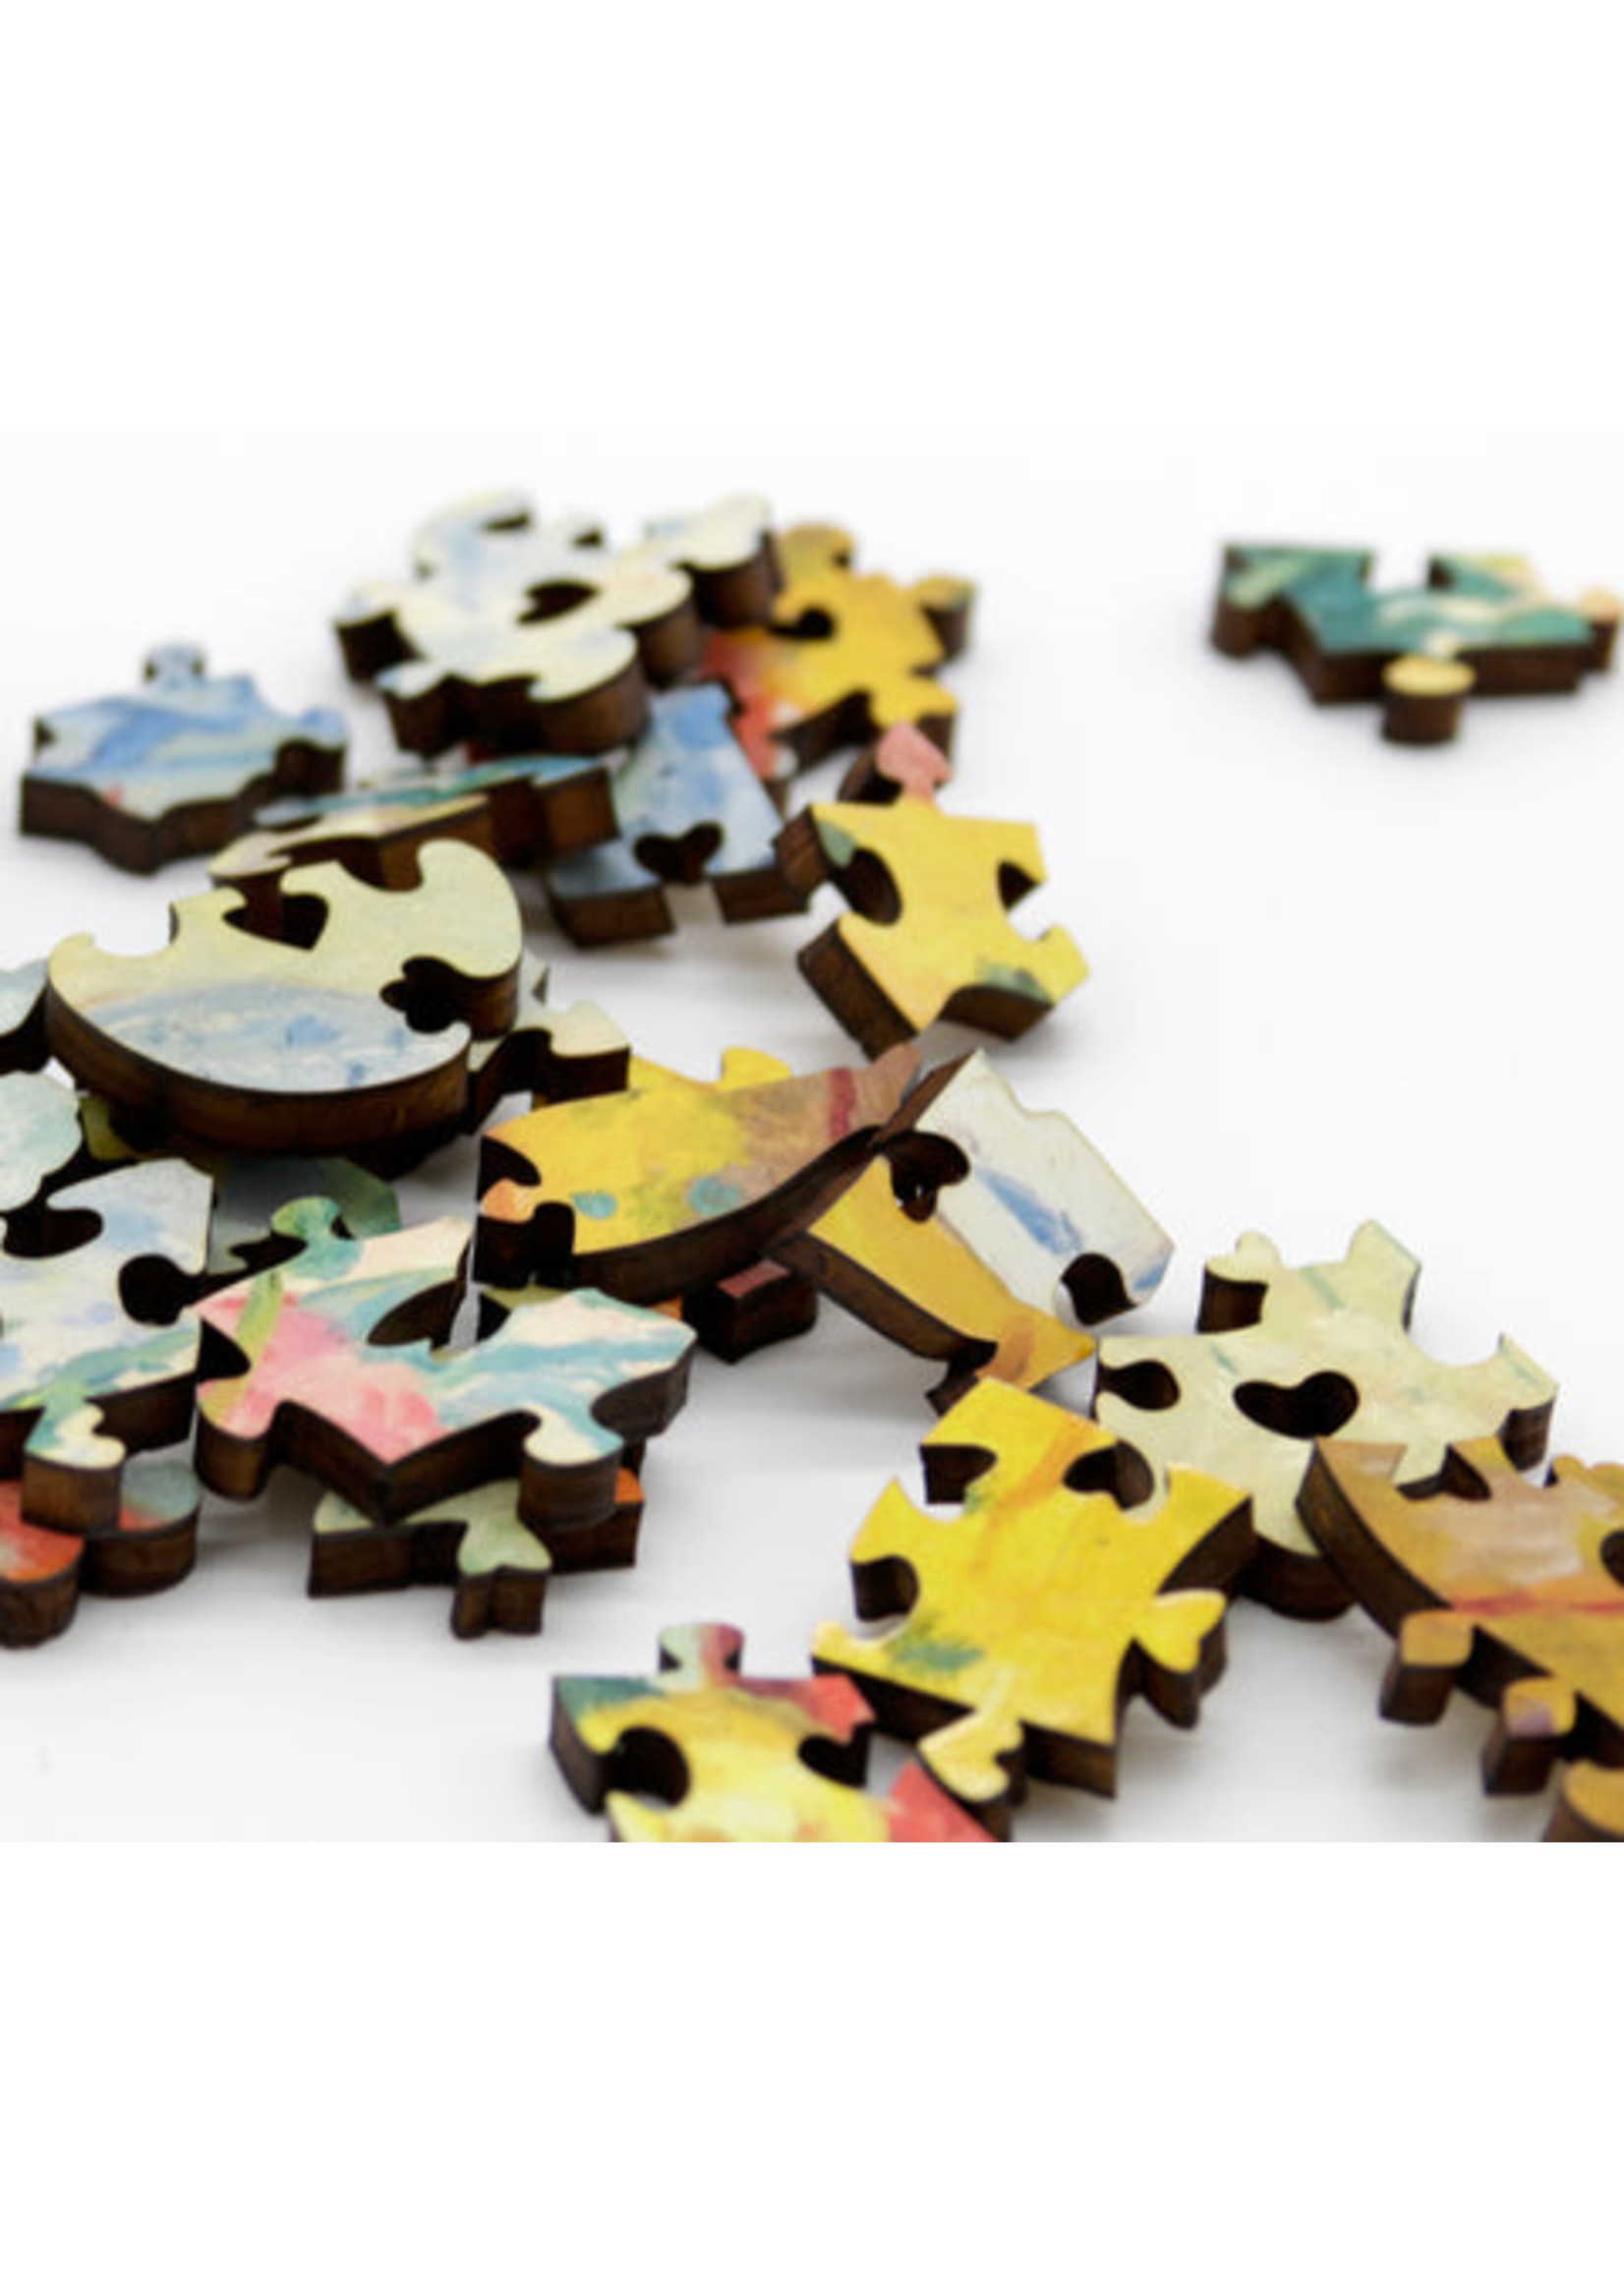 Artifact Puzzles "Les Renoncules" Artifact Wooden Jigsaw Puzzle